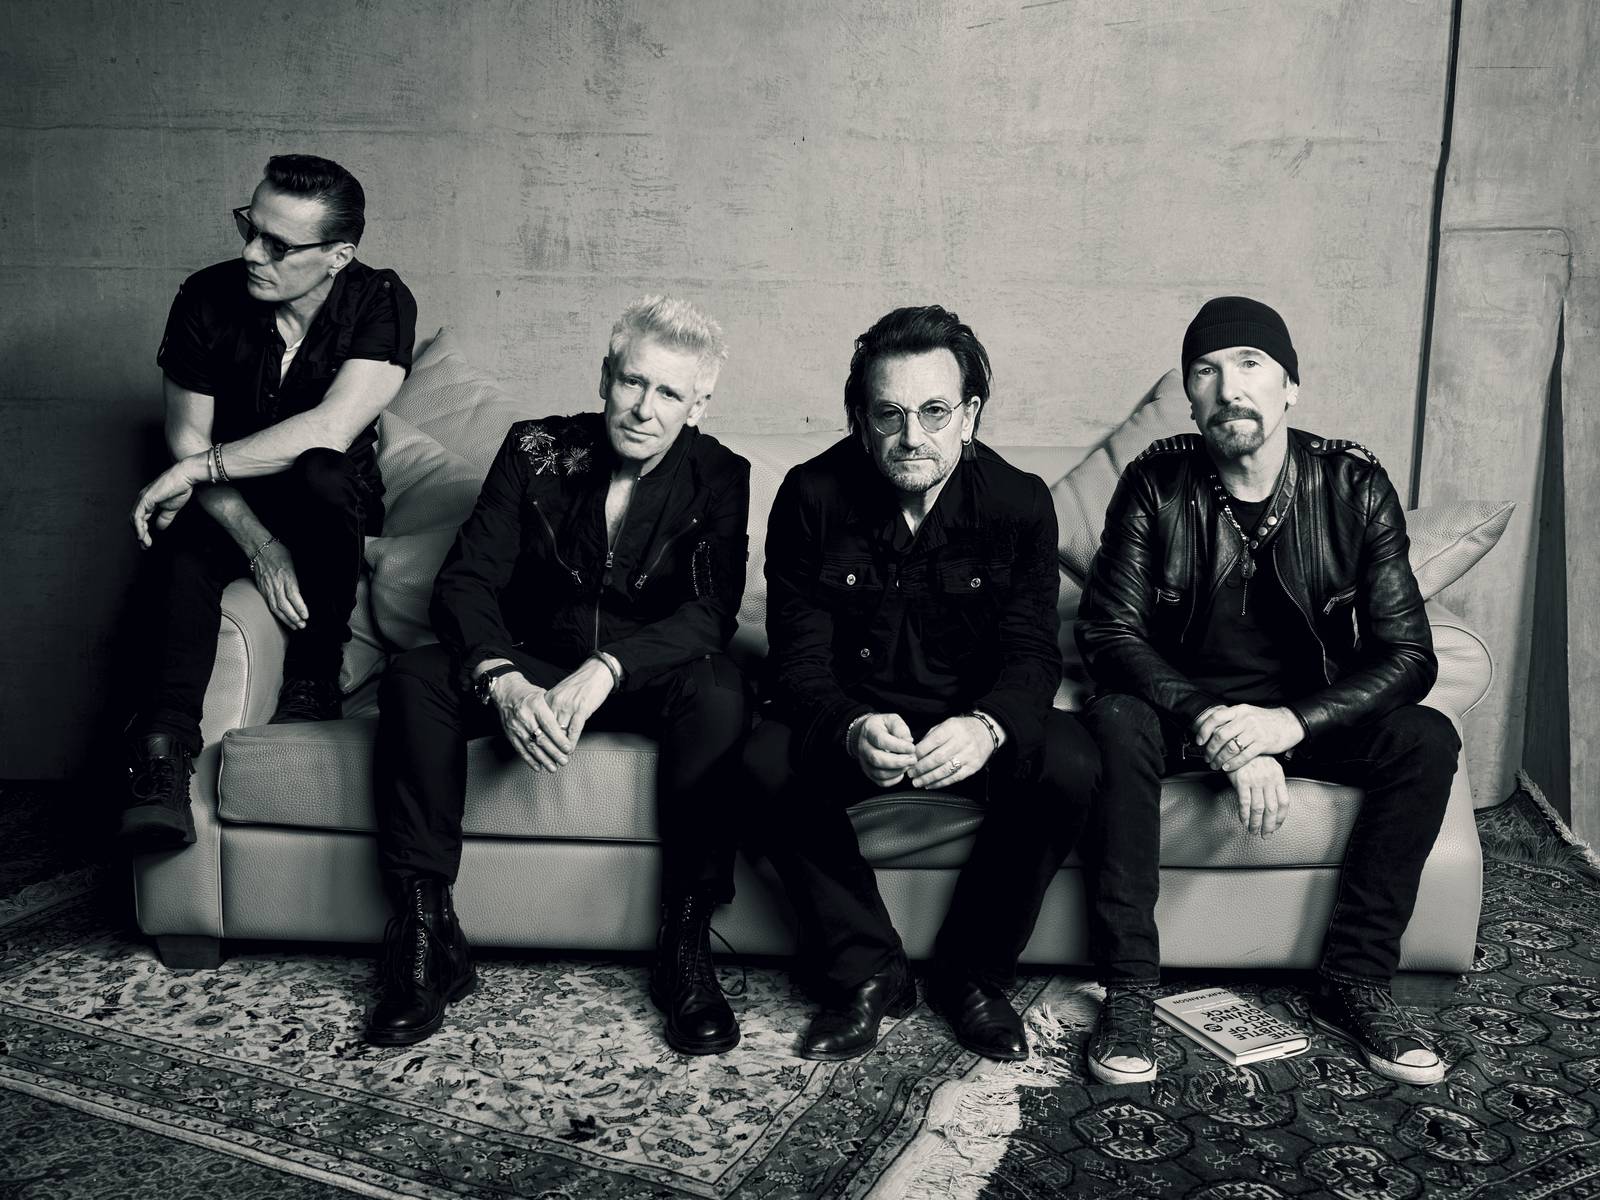 U2 drummer Larry Mullen will not play in band's Las Vegas